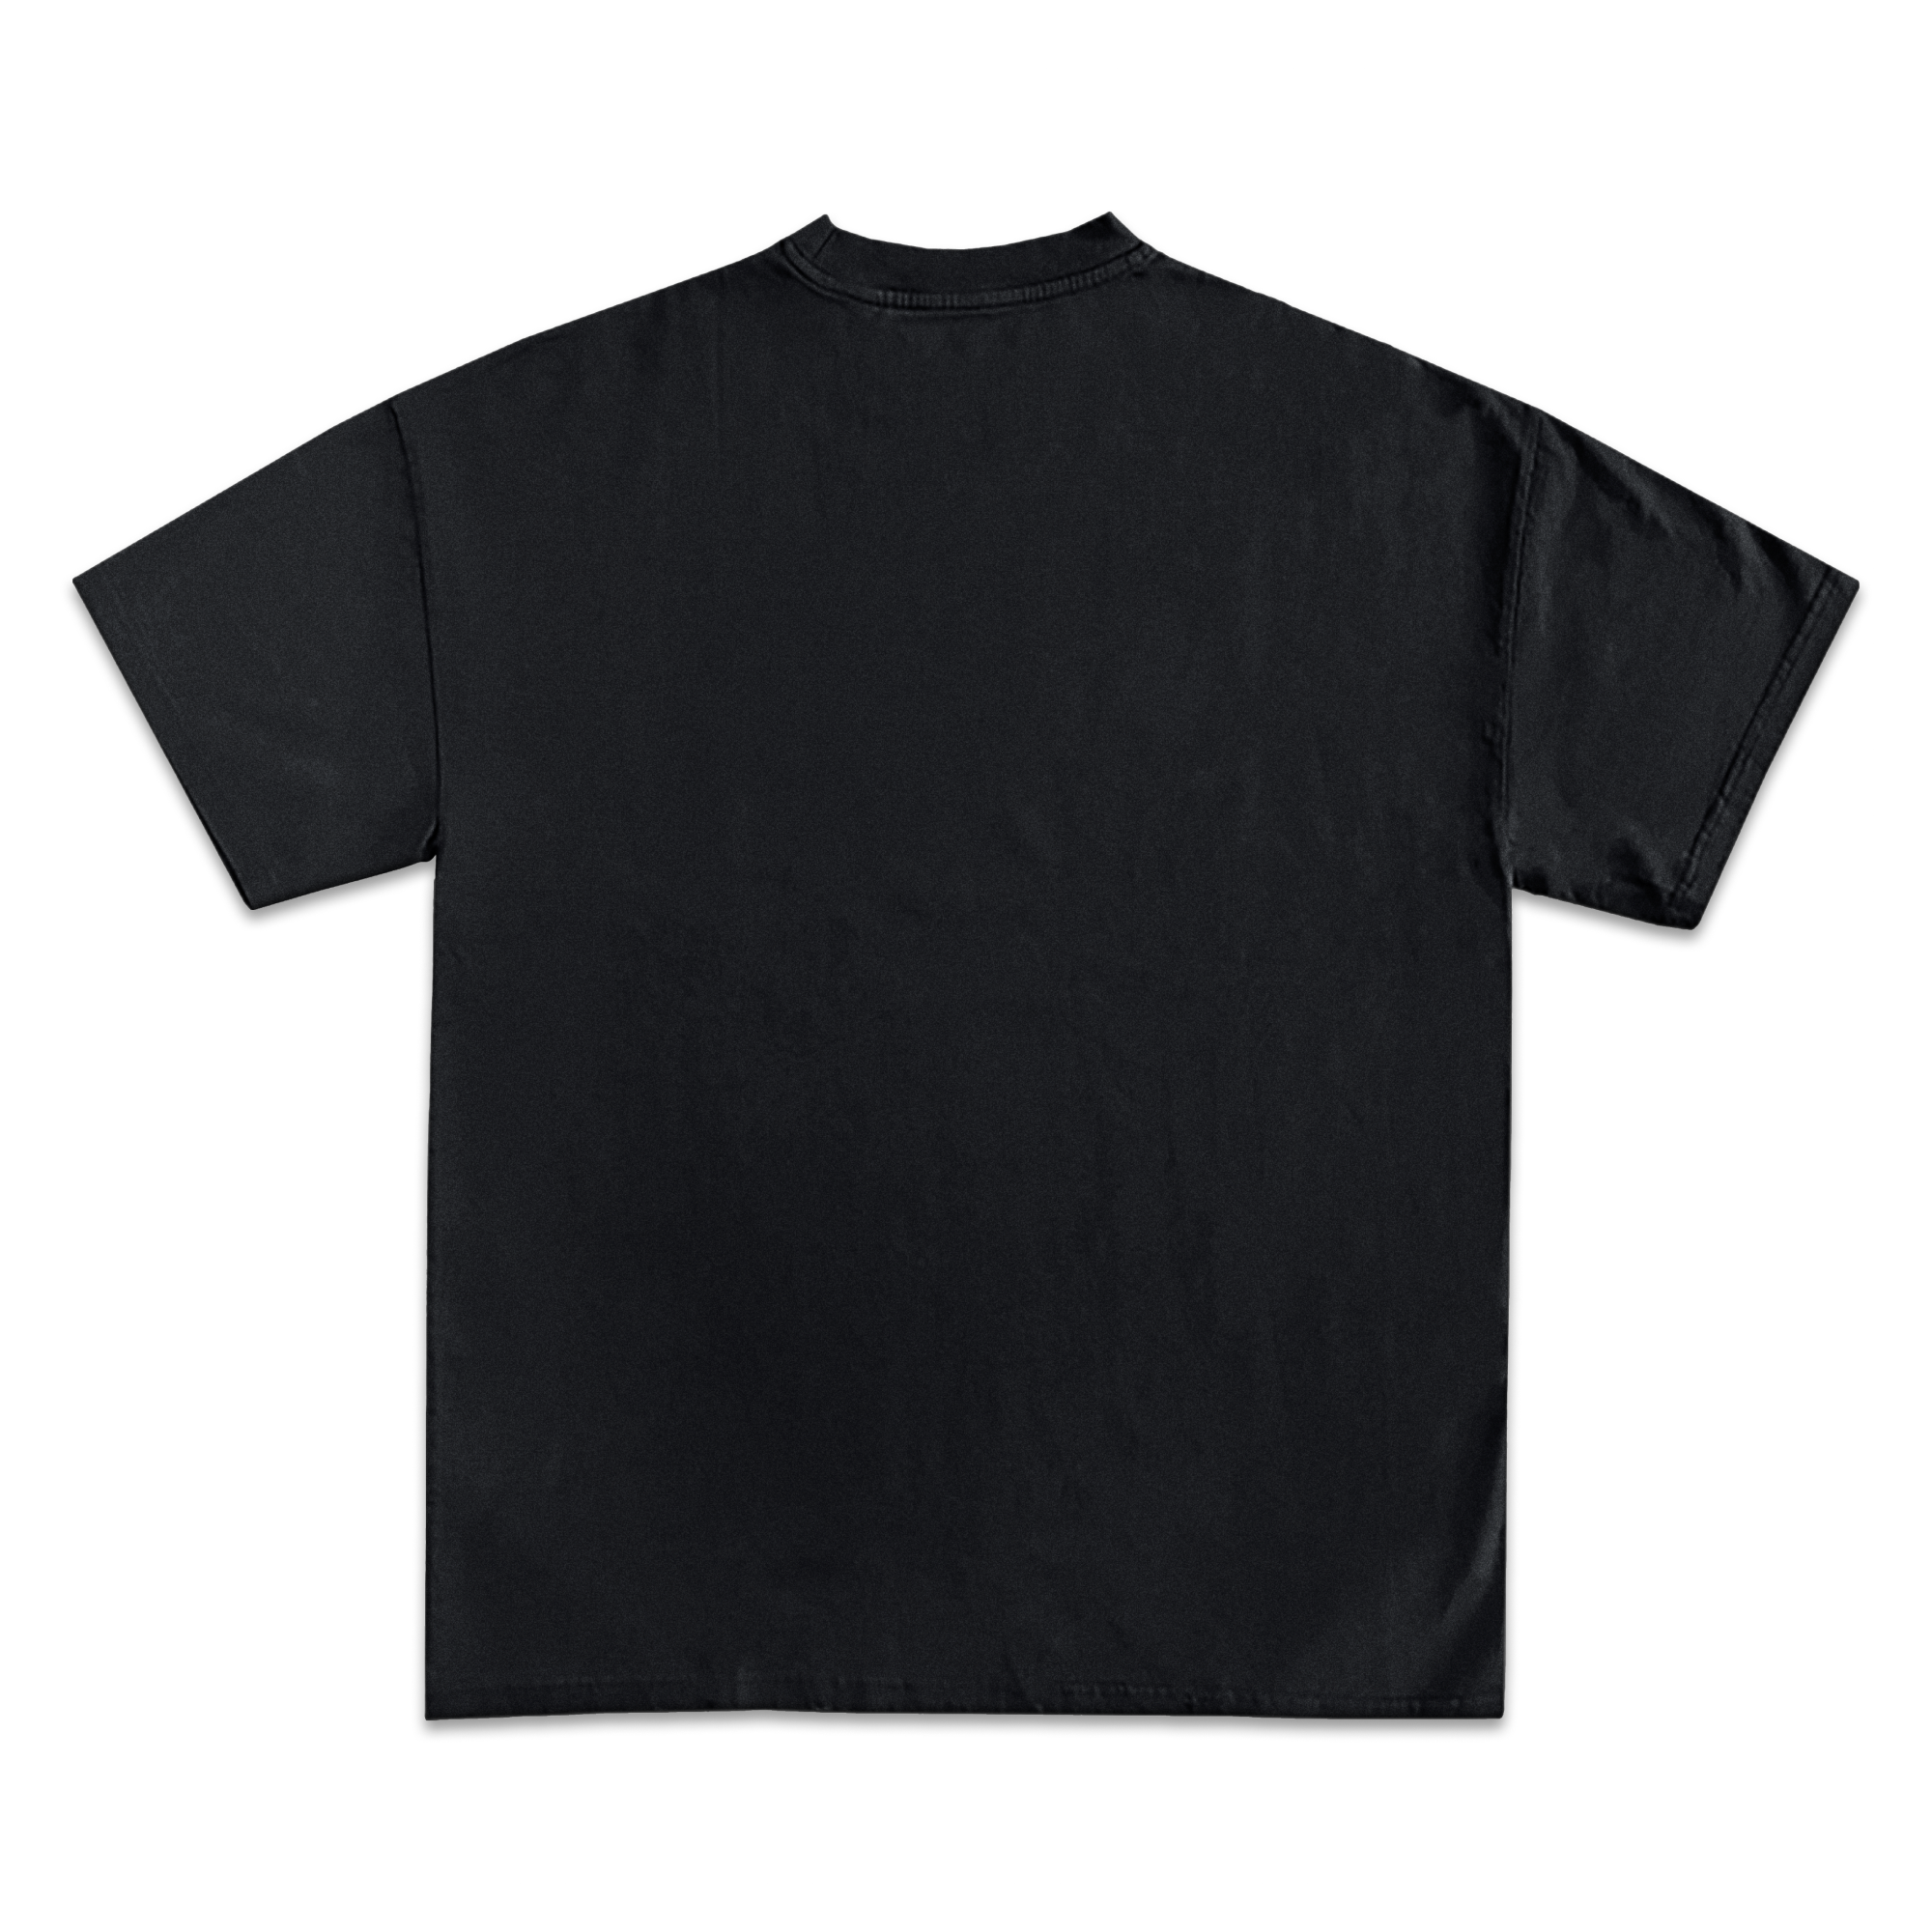 Juice Wrld "999" Graphic T-Shirt